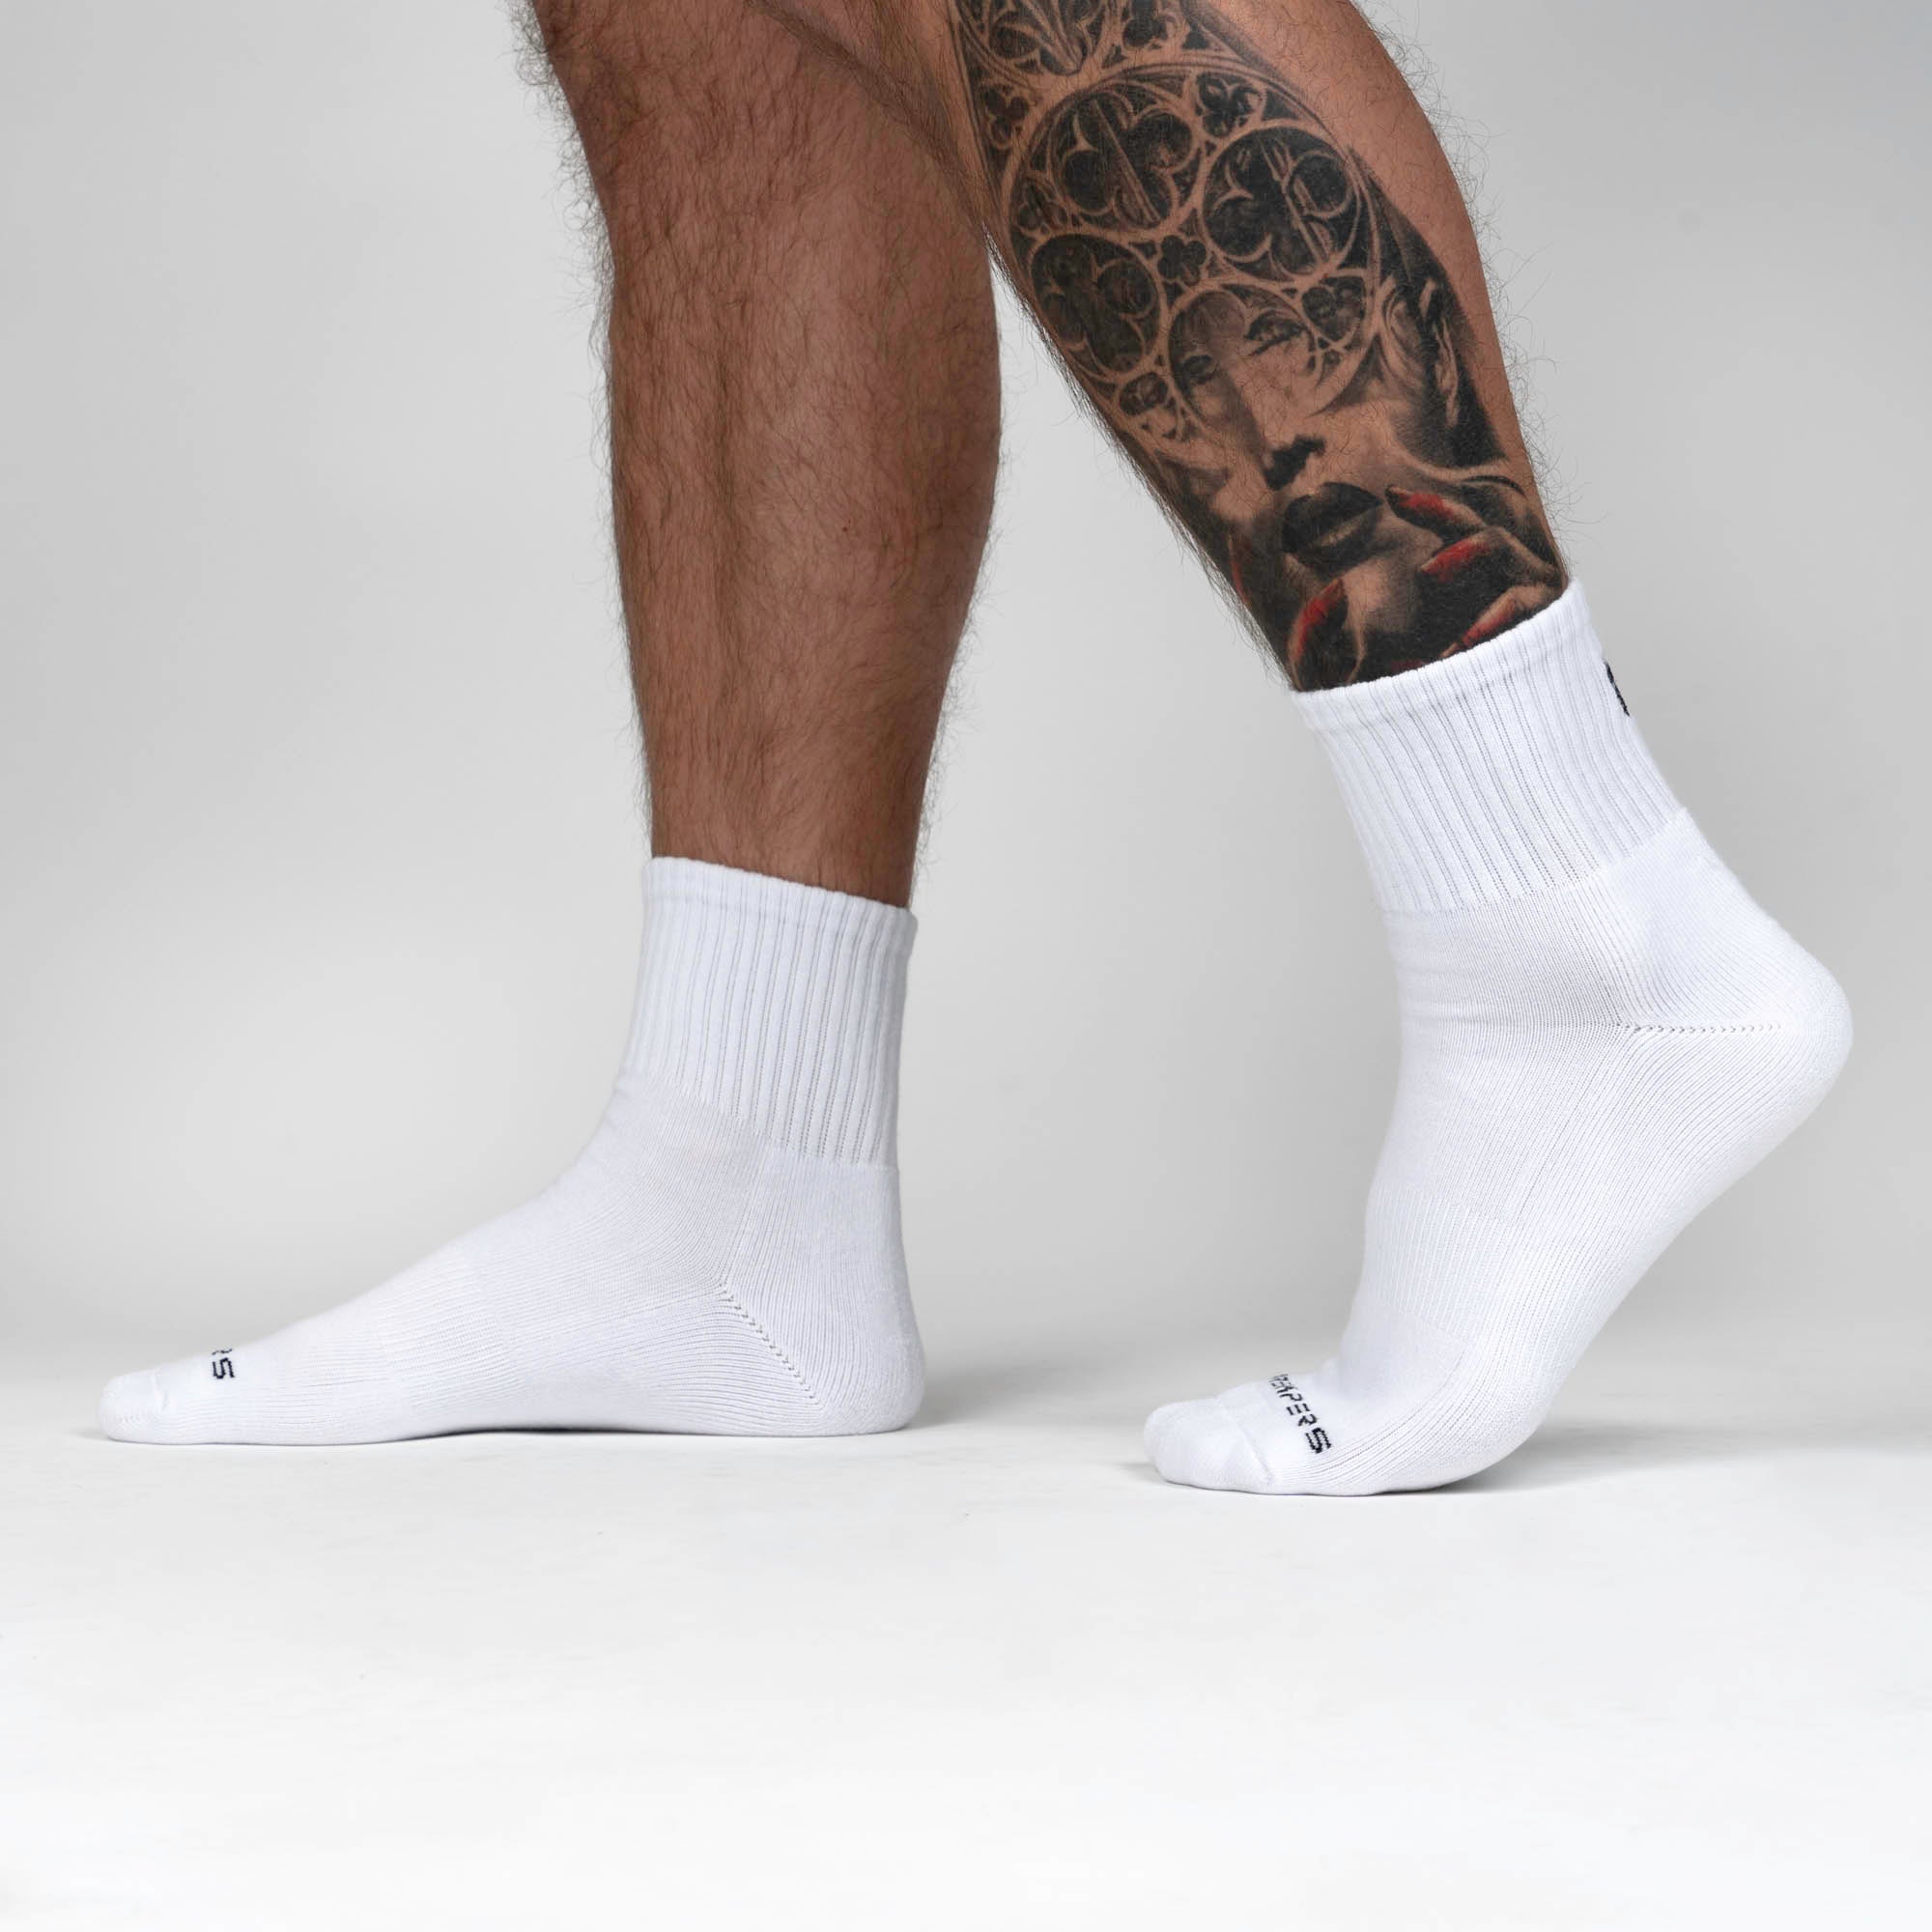 Quarter Socks (1PK) - Black